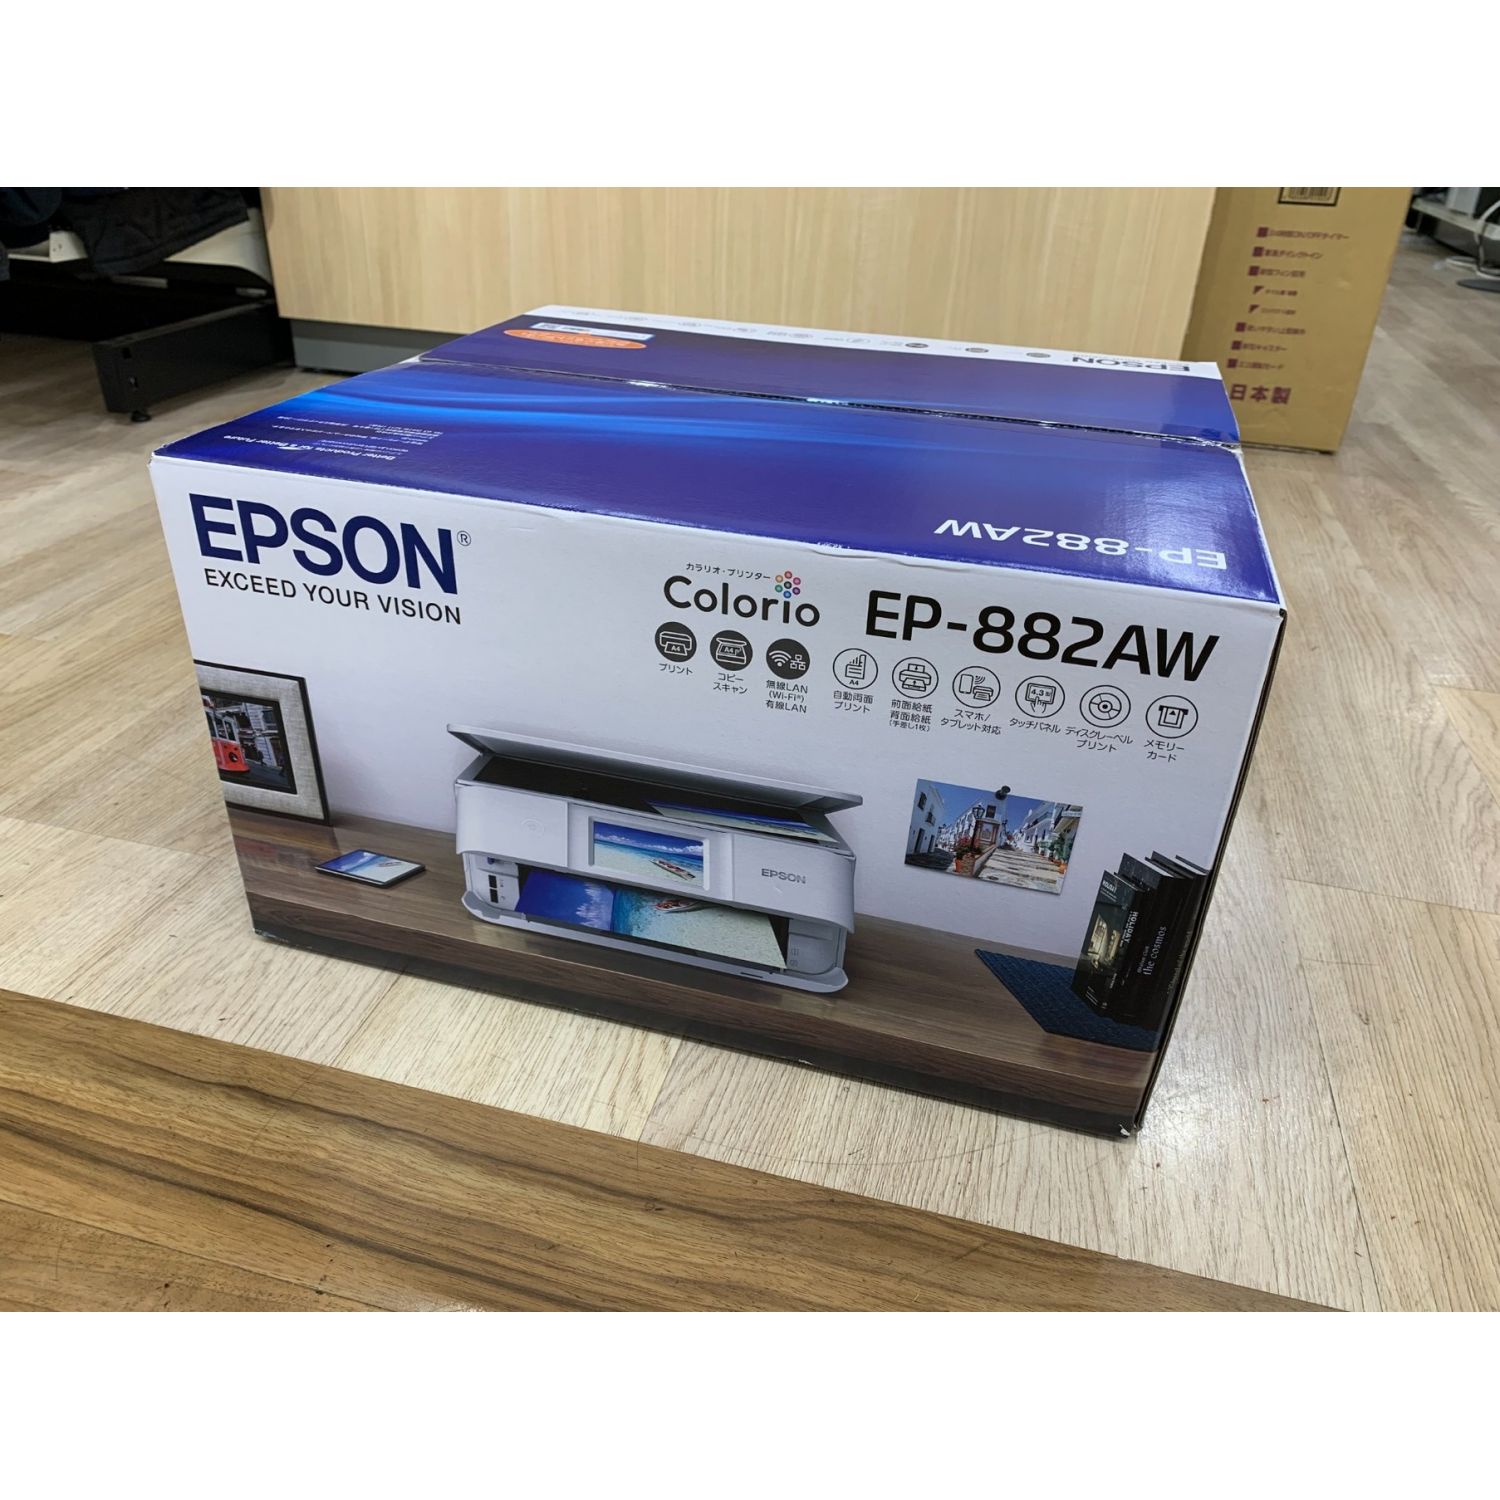 EPSON EP-882AW - プリンター・複合機